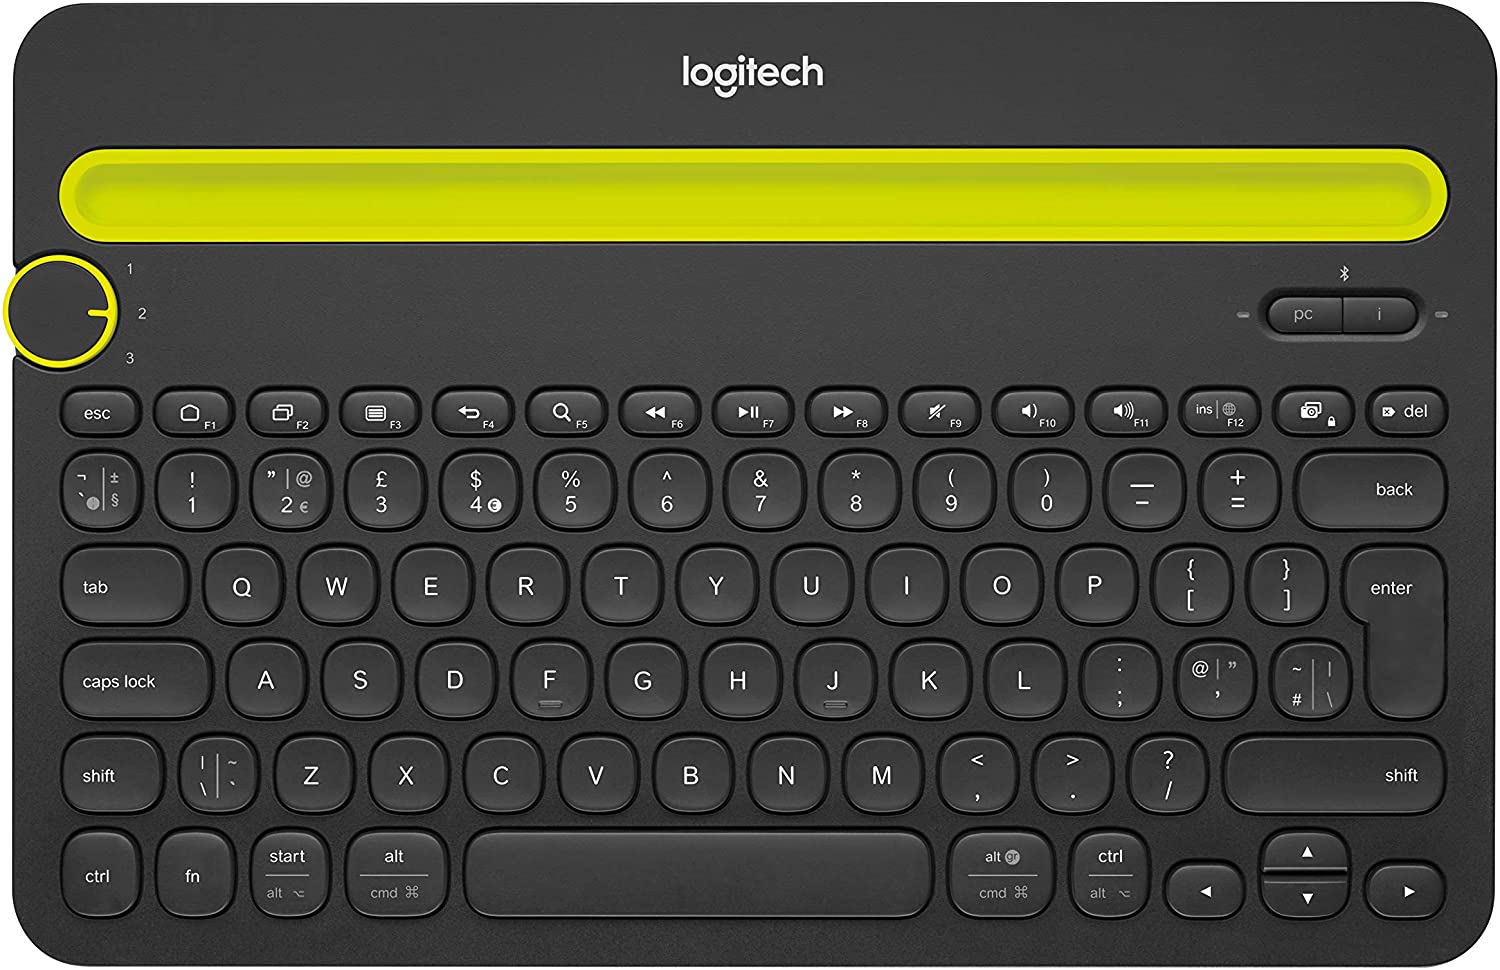 Logitech Spill-Resistant Bluetooth Multi-Device Keyboard